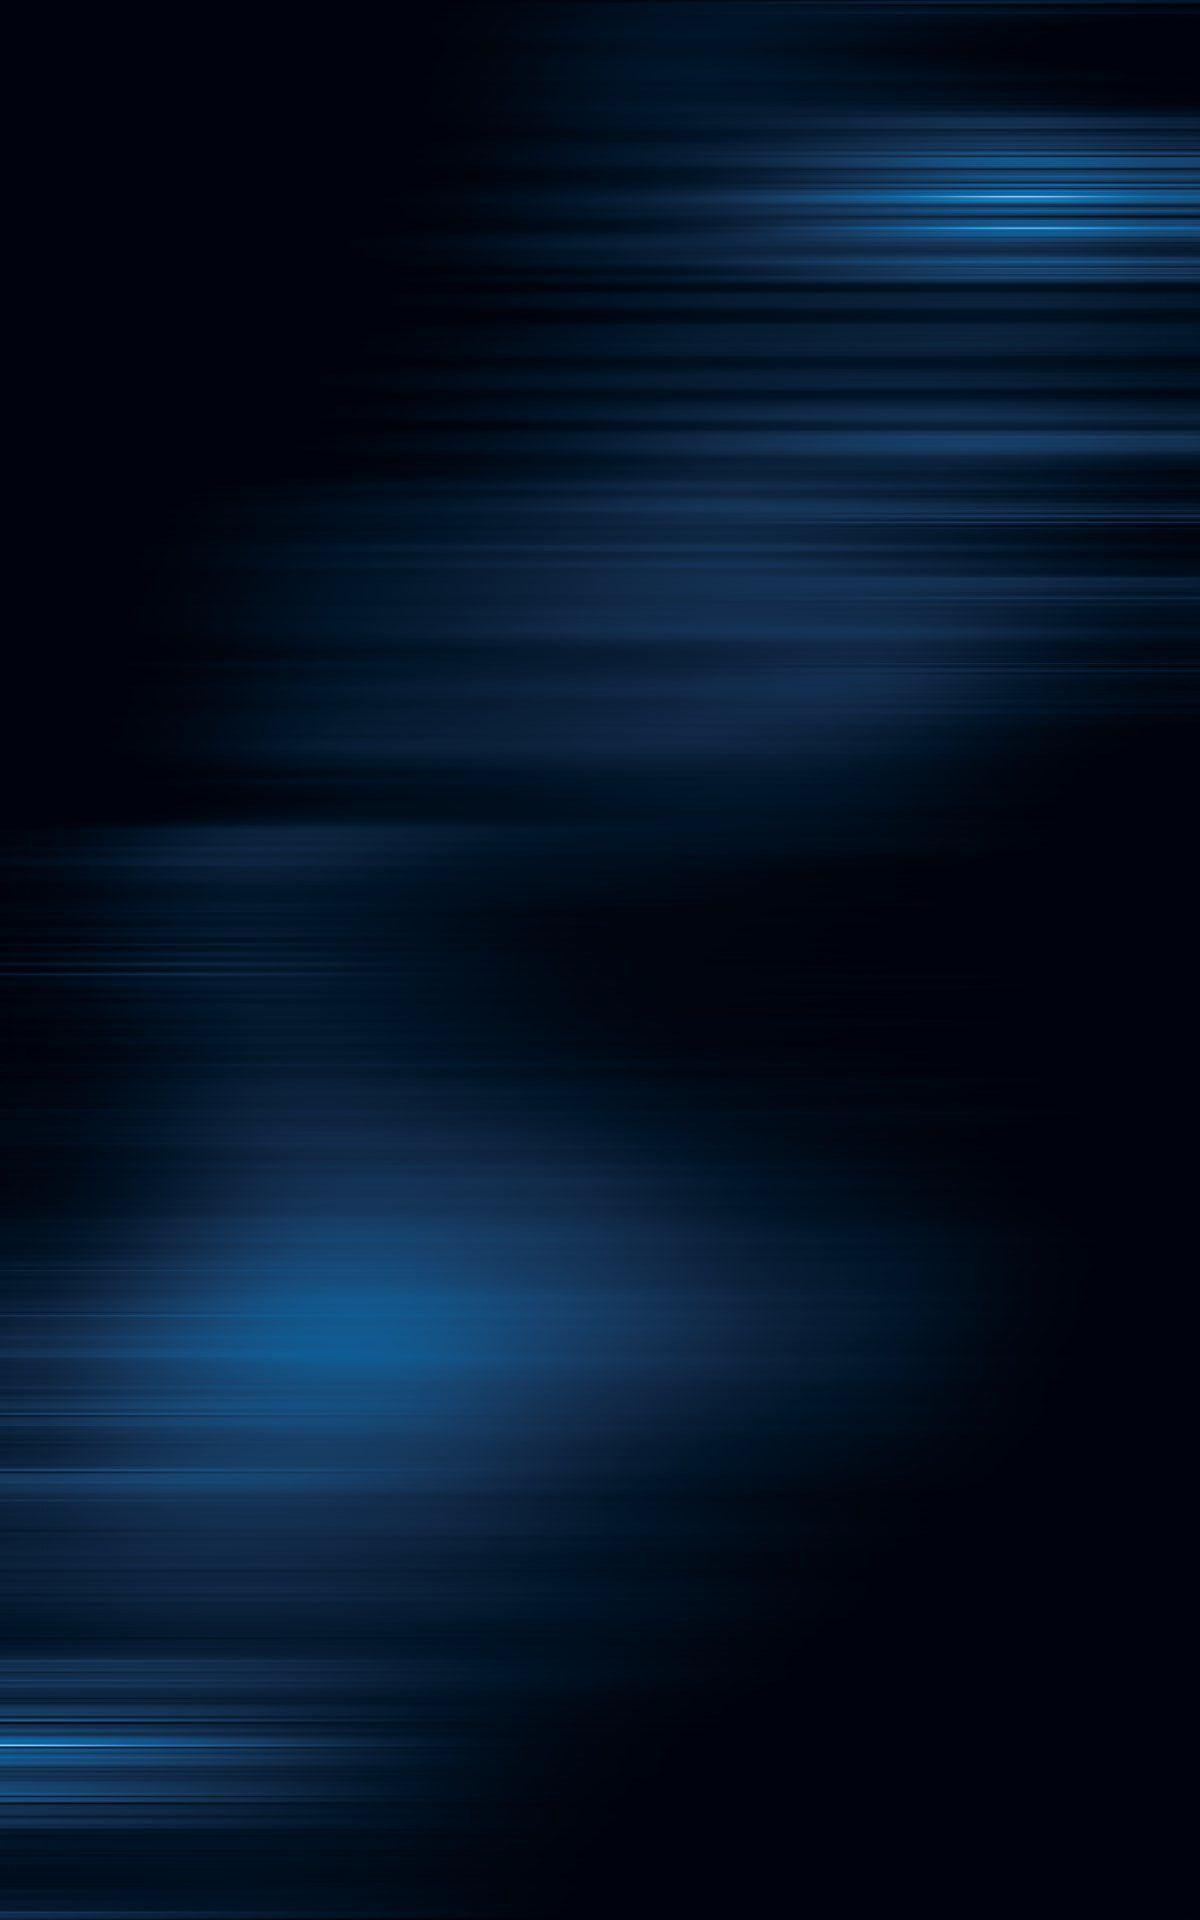 Black Blue Wallpaper iPHone. Blue wallpaper iphone, Blue